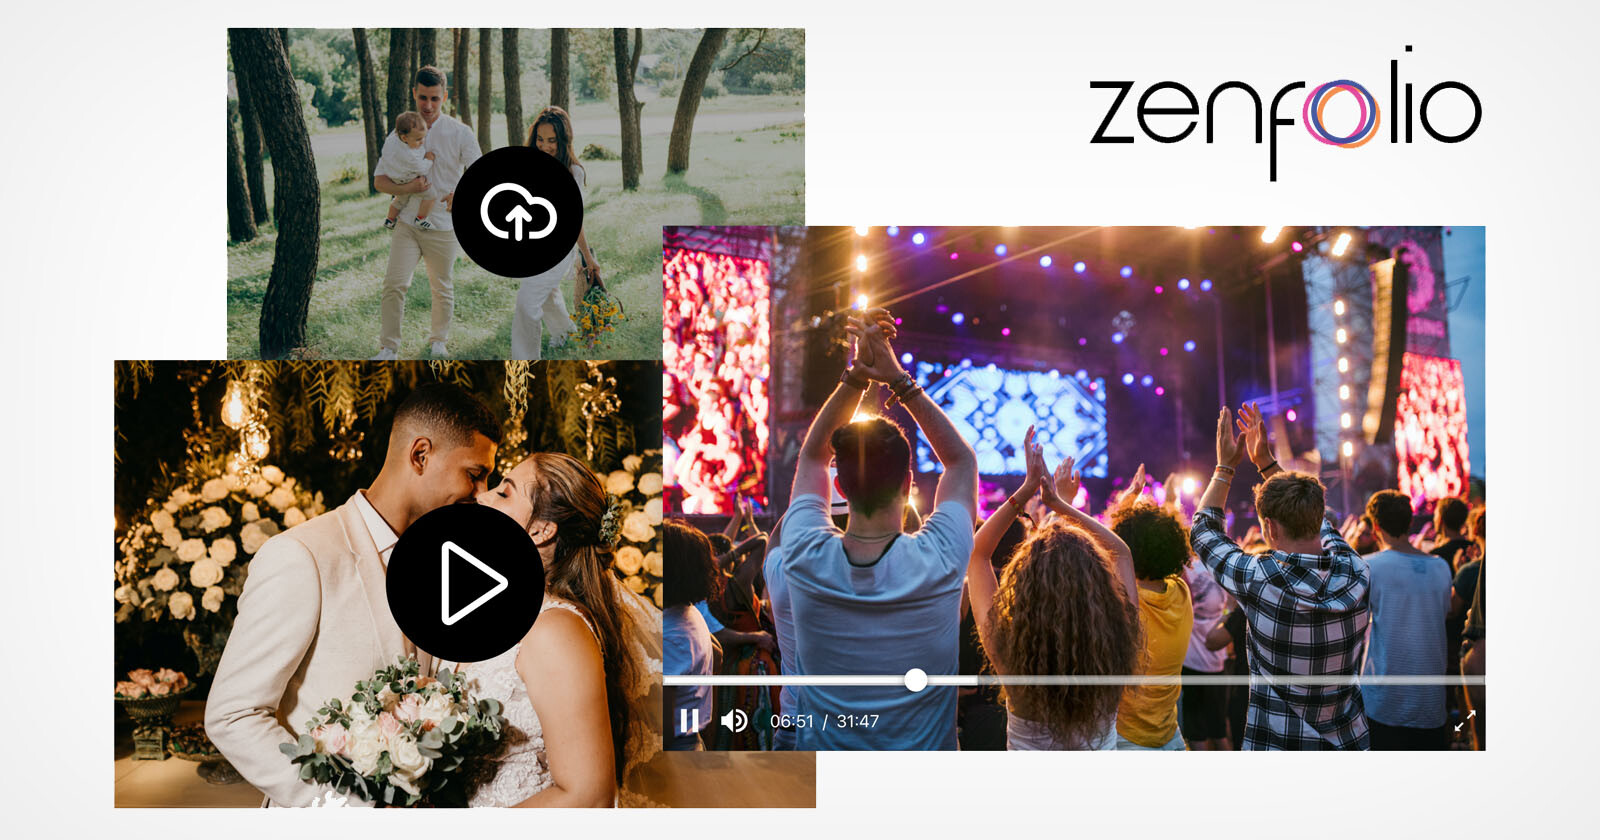  zenfolio now offers unlimited photo storage video 